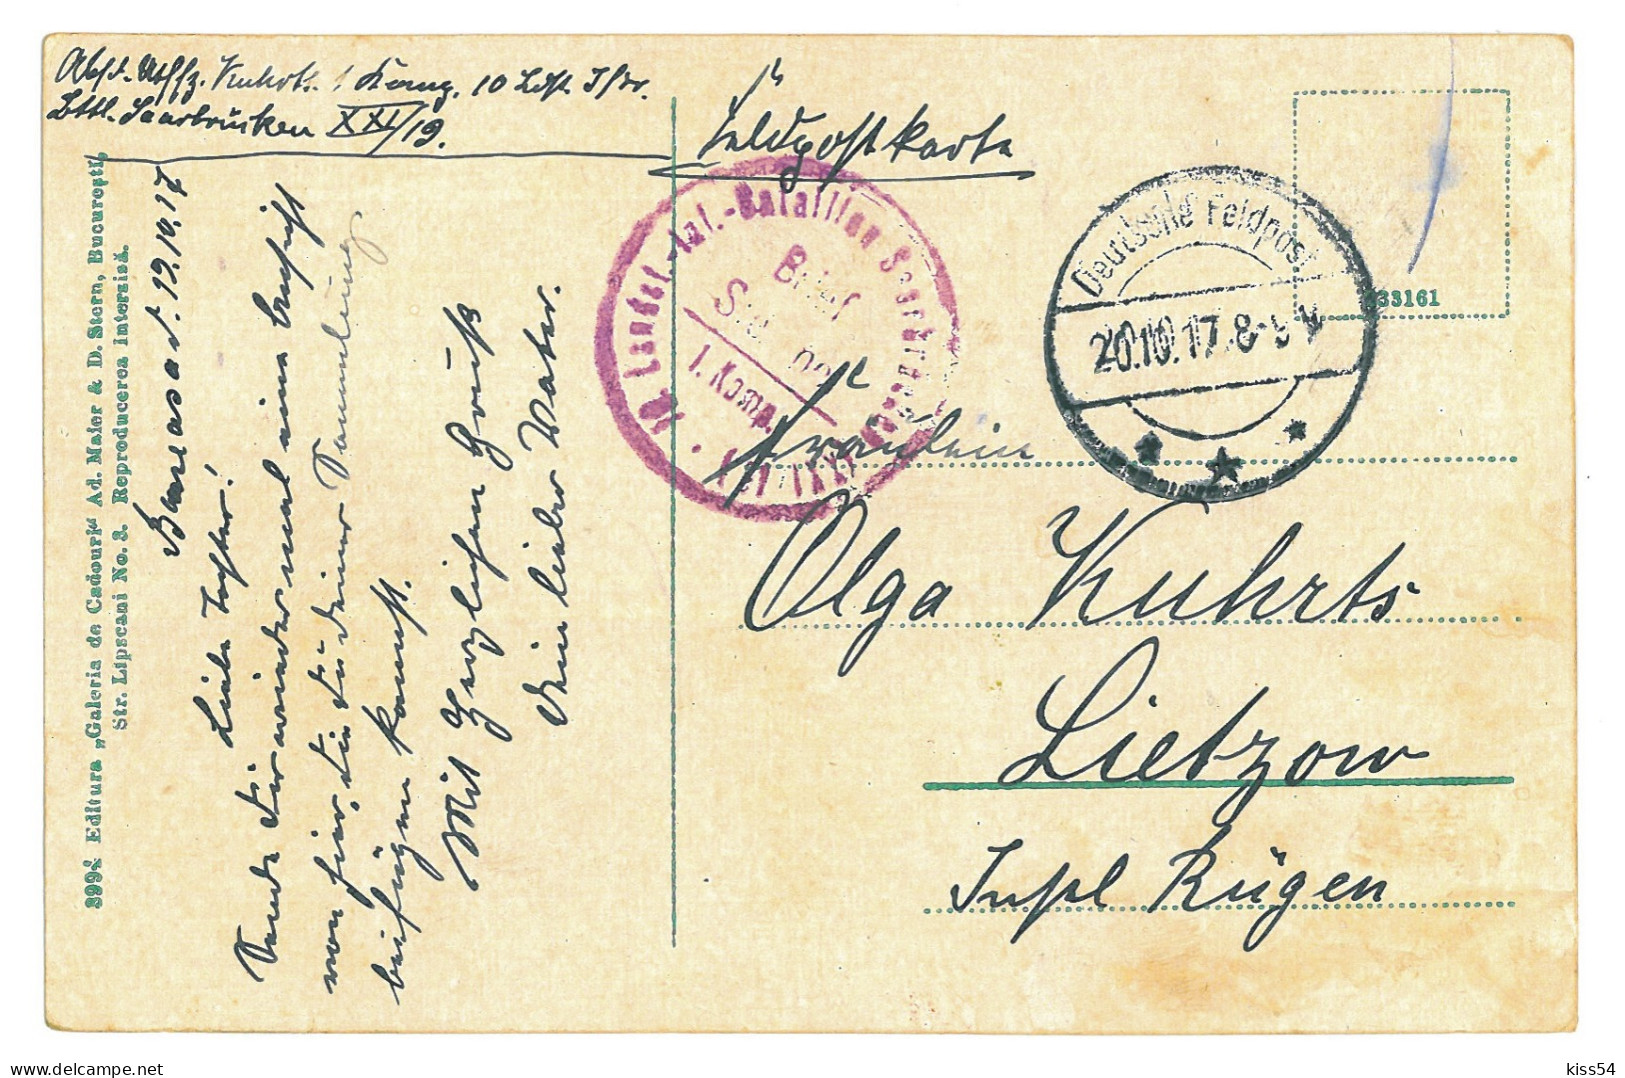 RO 45 - 22643 RUCAR, Brasov, ETHNIC, Romania - Old Postcard, CENSOR - Used - 1917 - Romania